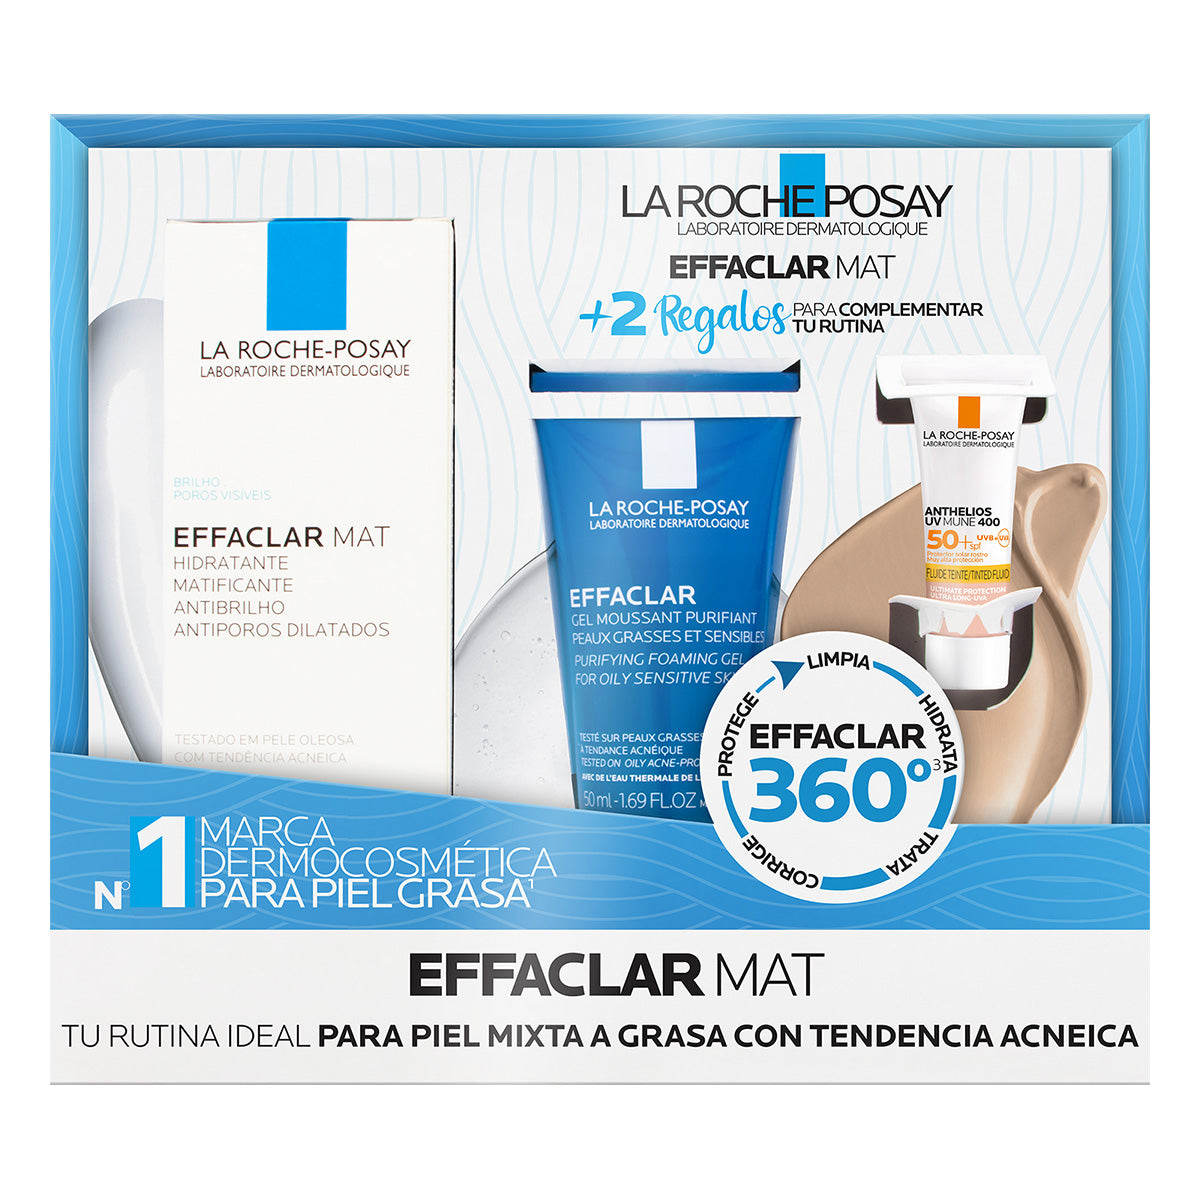 La Roche Posay Effaclar Mat, Rutina para piel mixta a grasa con tendencia acneica, Kit Effaclar Mat + Effaclar Gel + Anthelios UV MUNE 400 con Color